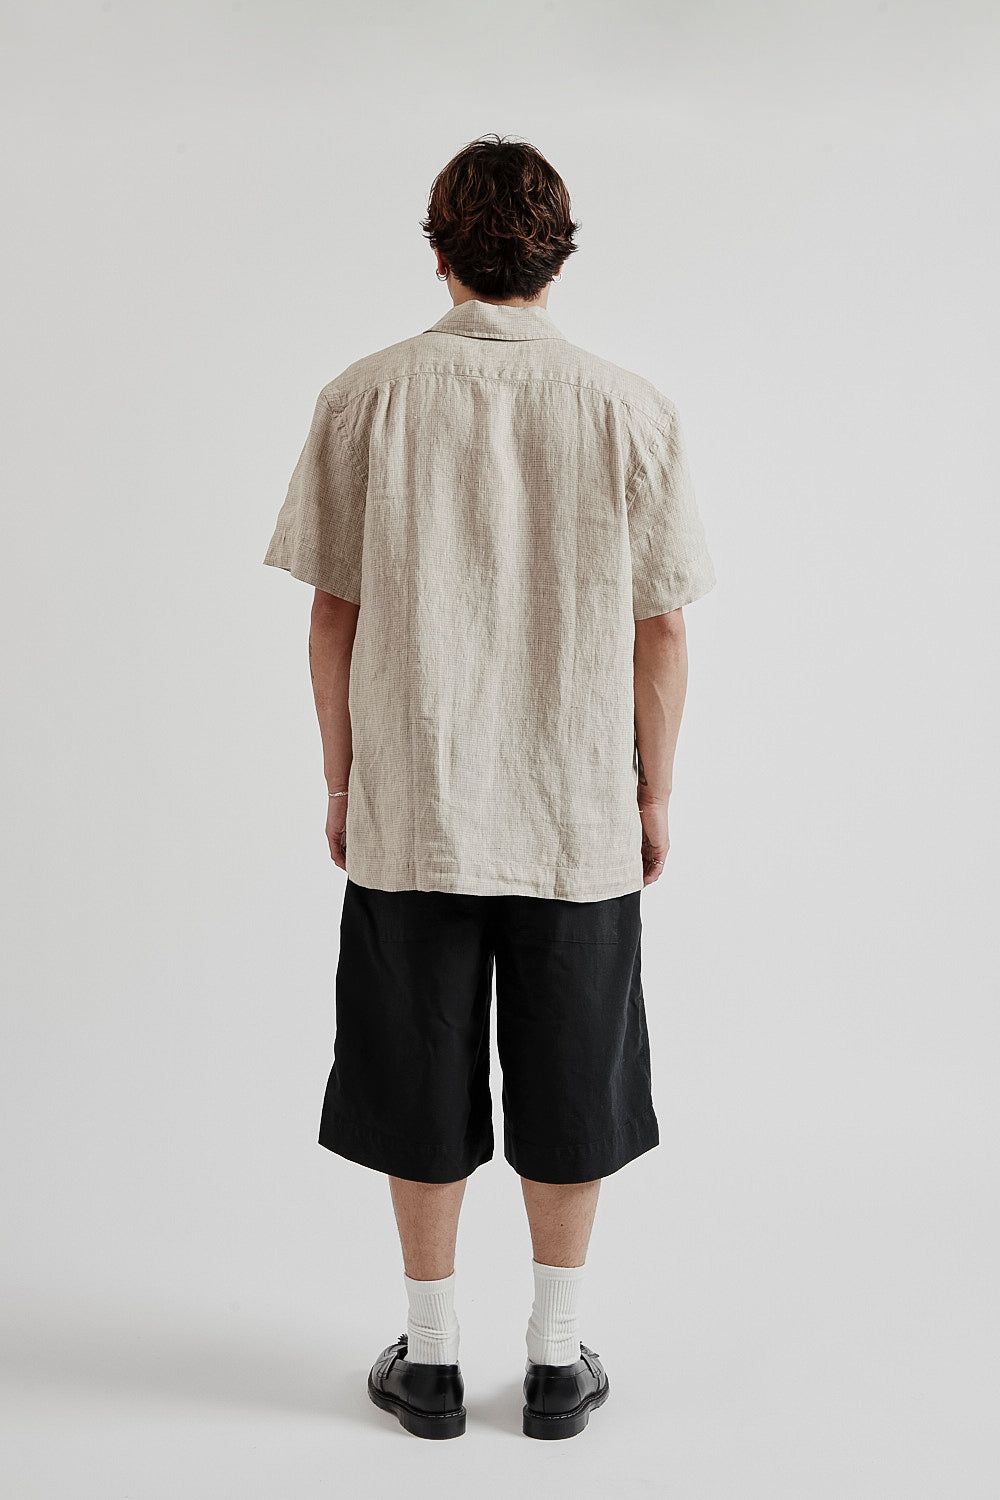 Royan Shirts - Off White/Beige Checks